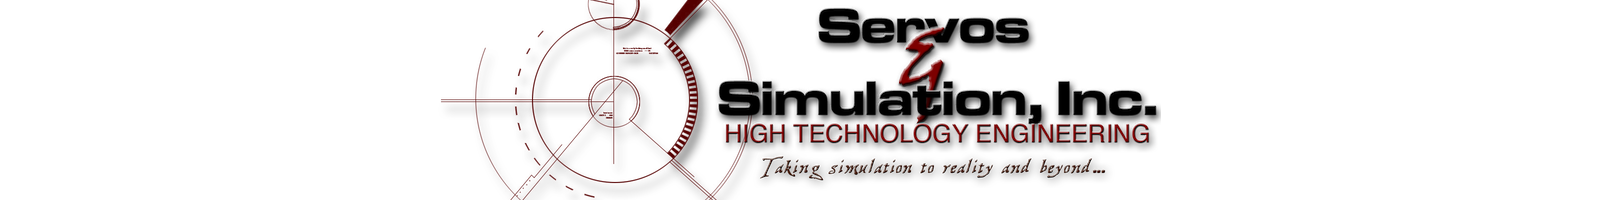 Servos & Simulation, Inc